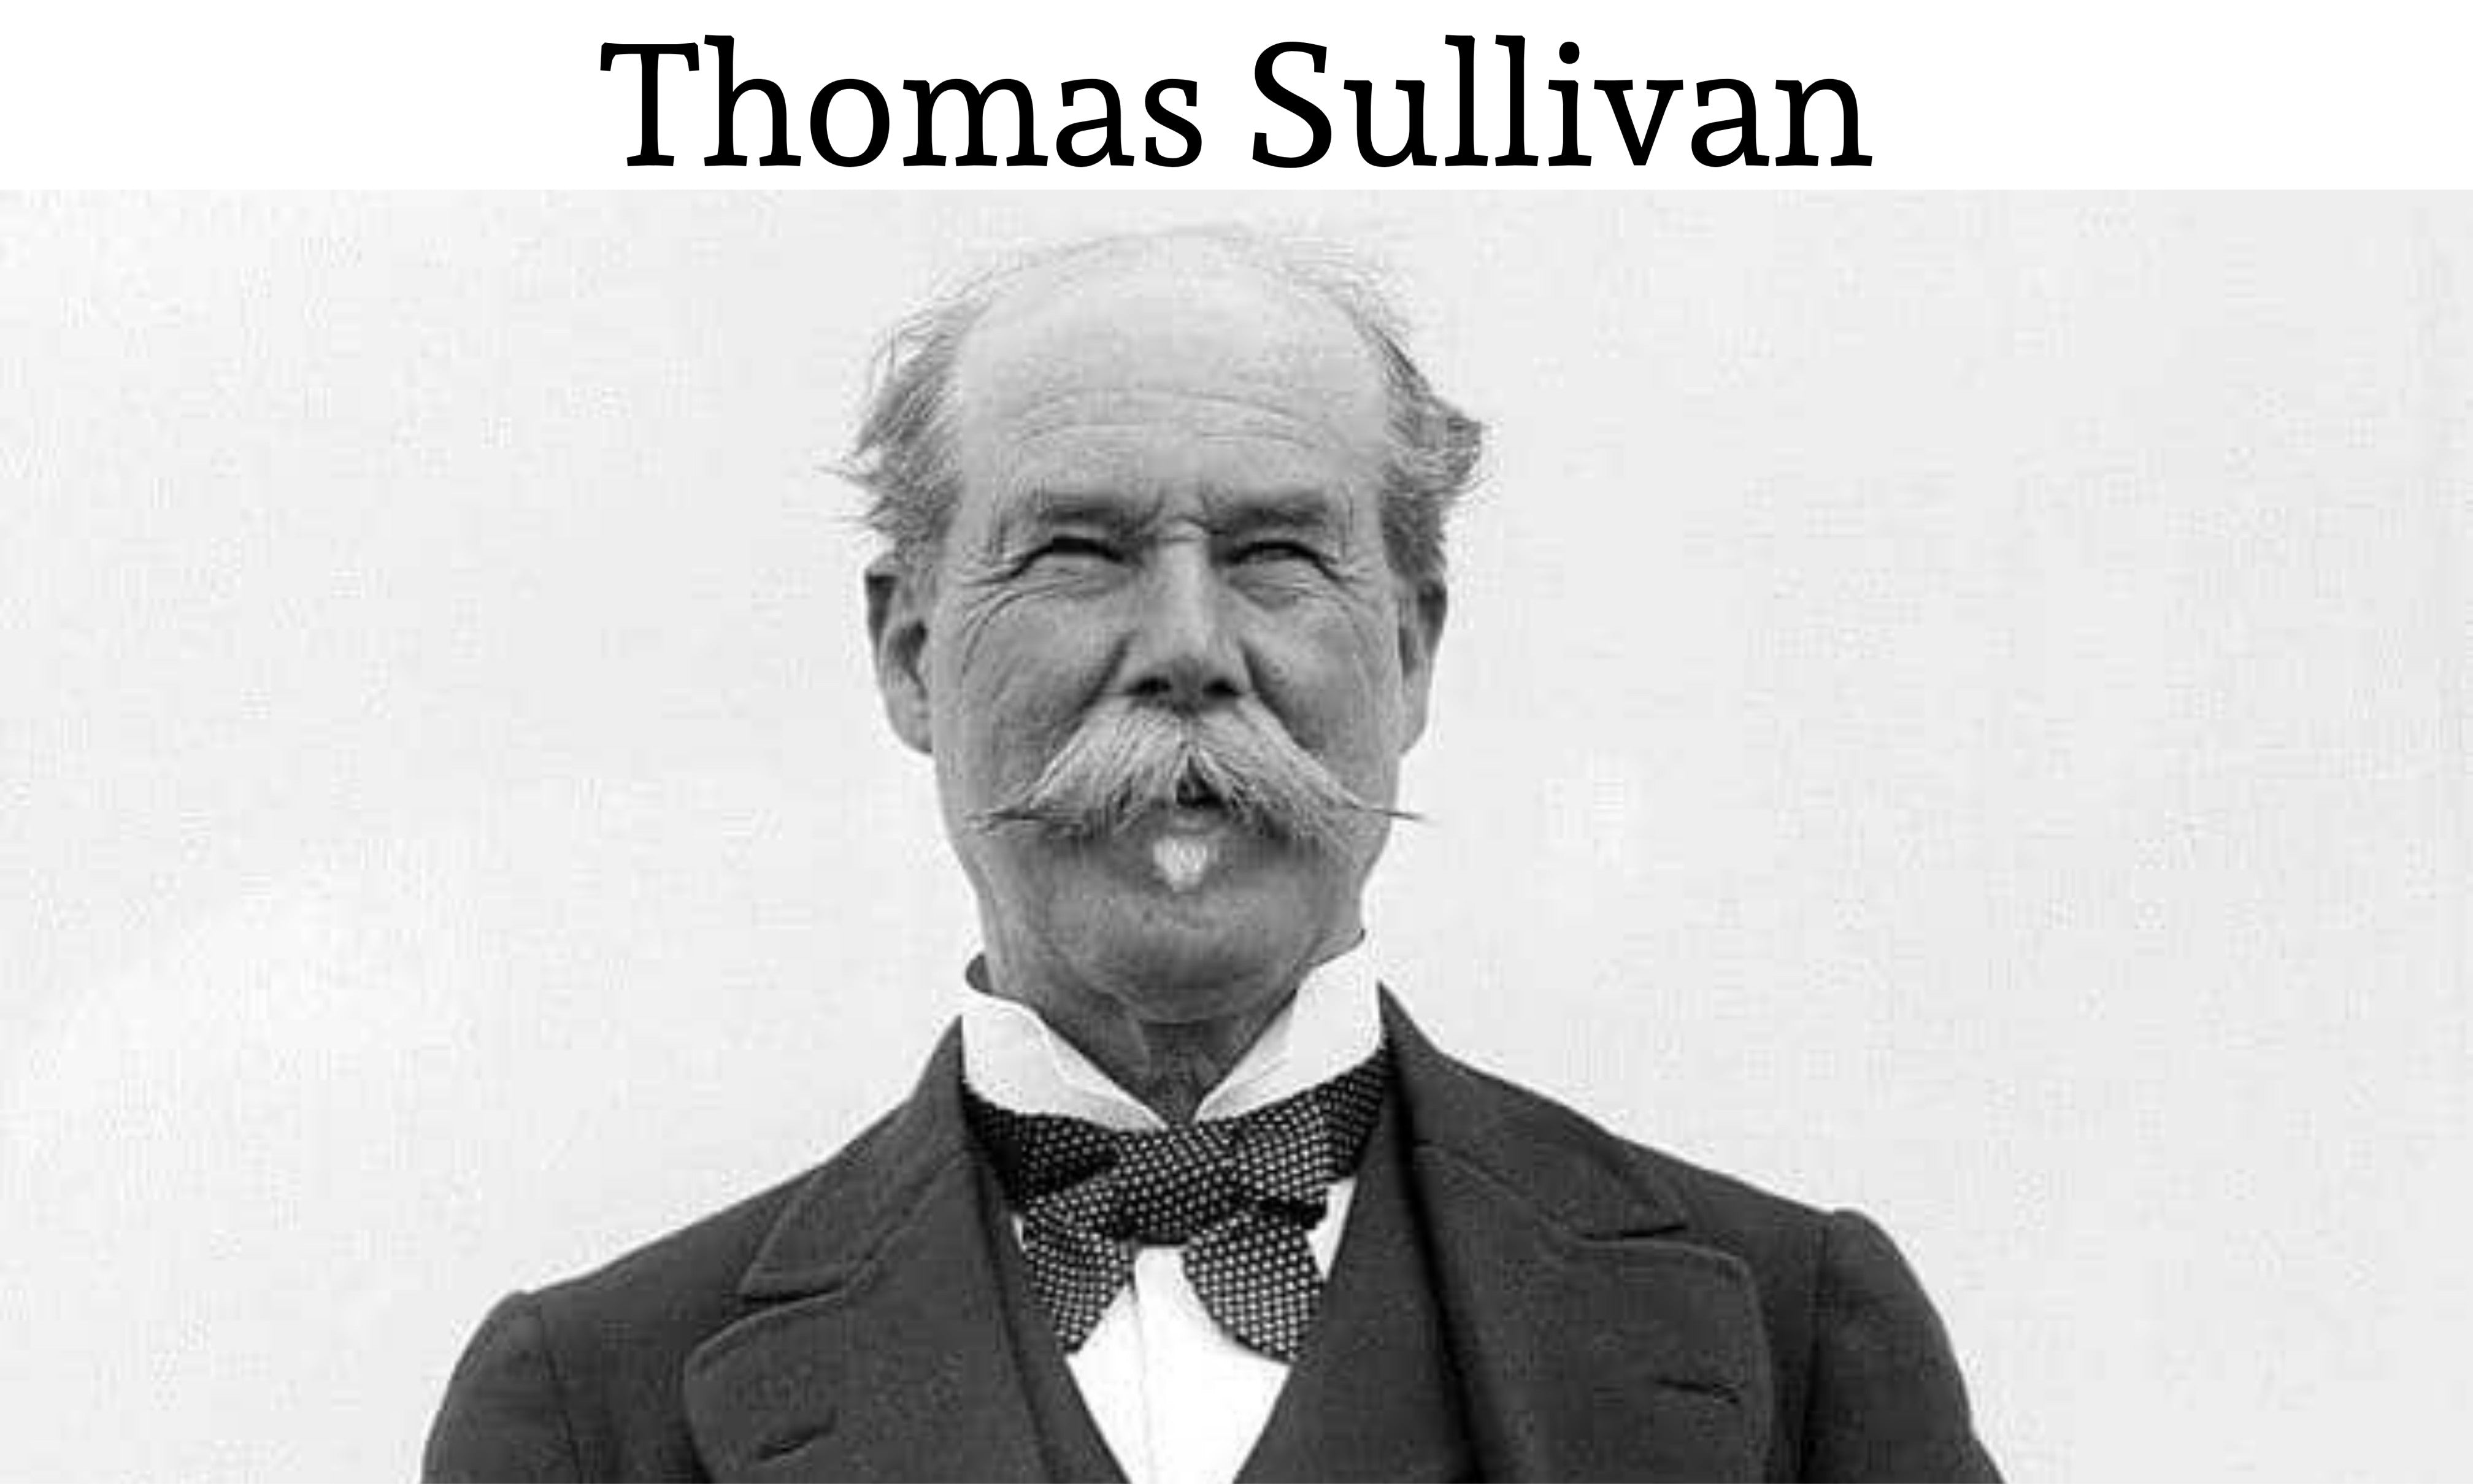 Thomas Sullivan, inventor of the tea bag